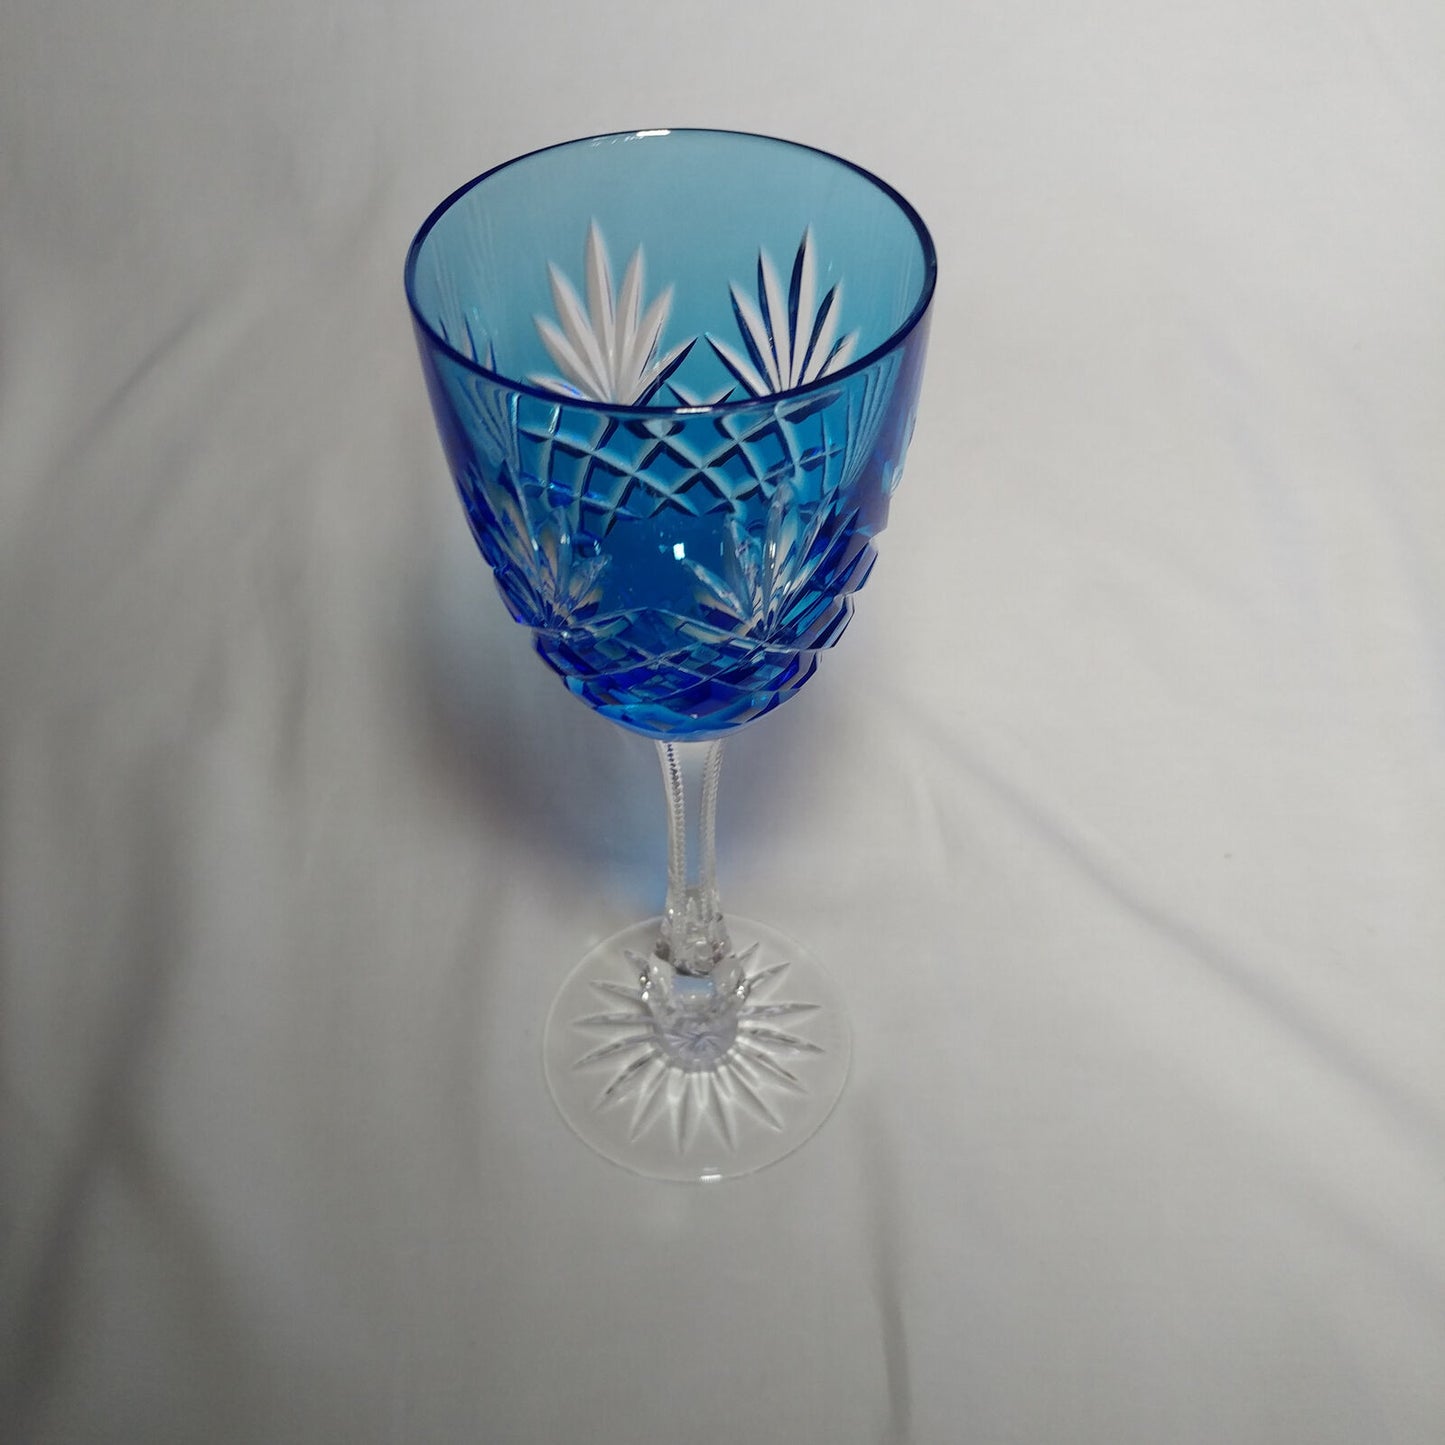 Faberge Odessa Sky Blue Crystal Glass